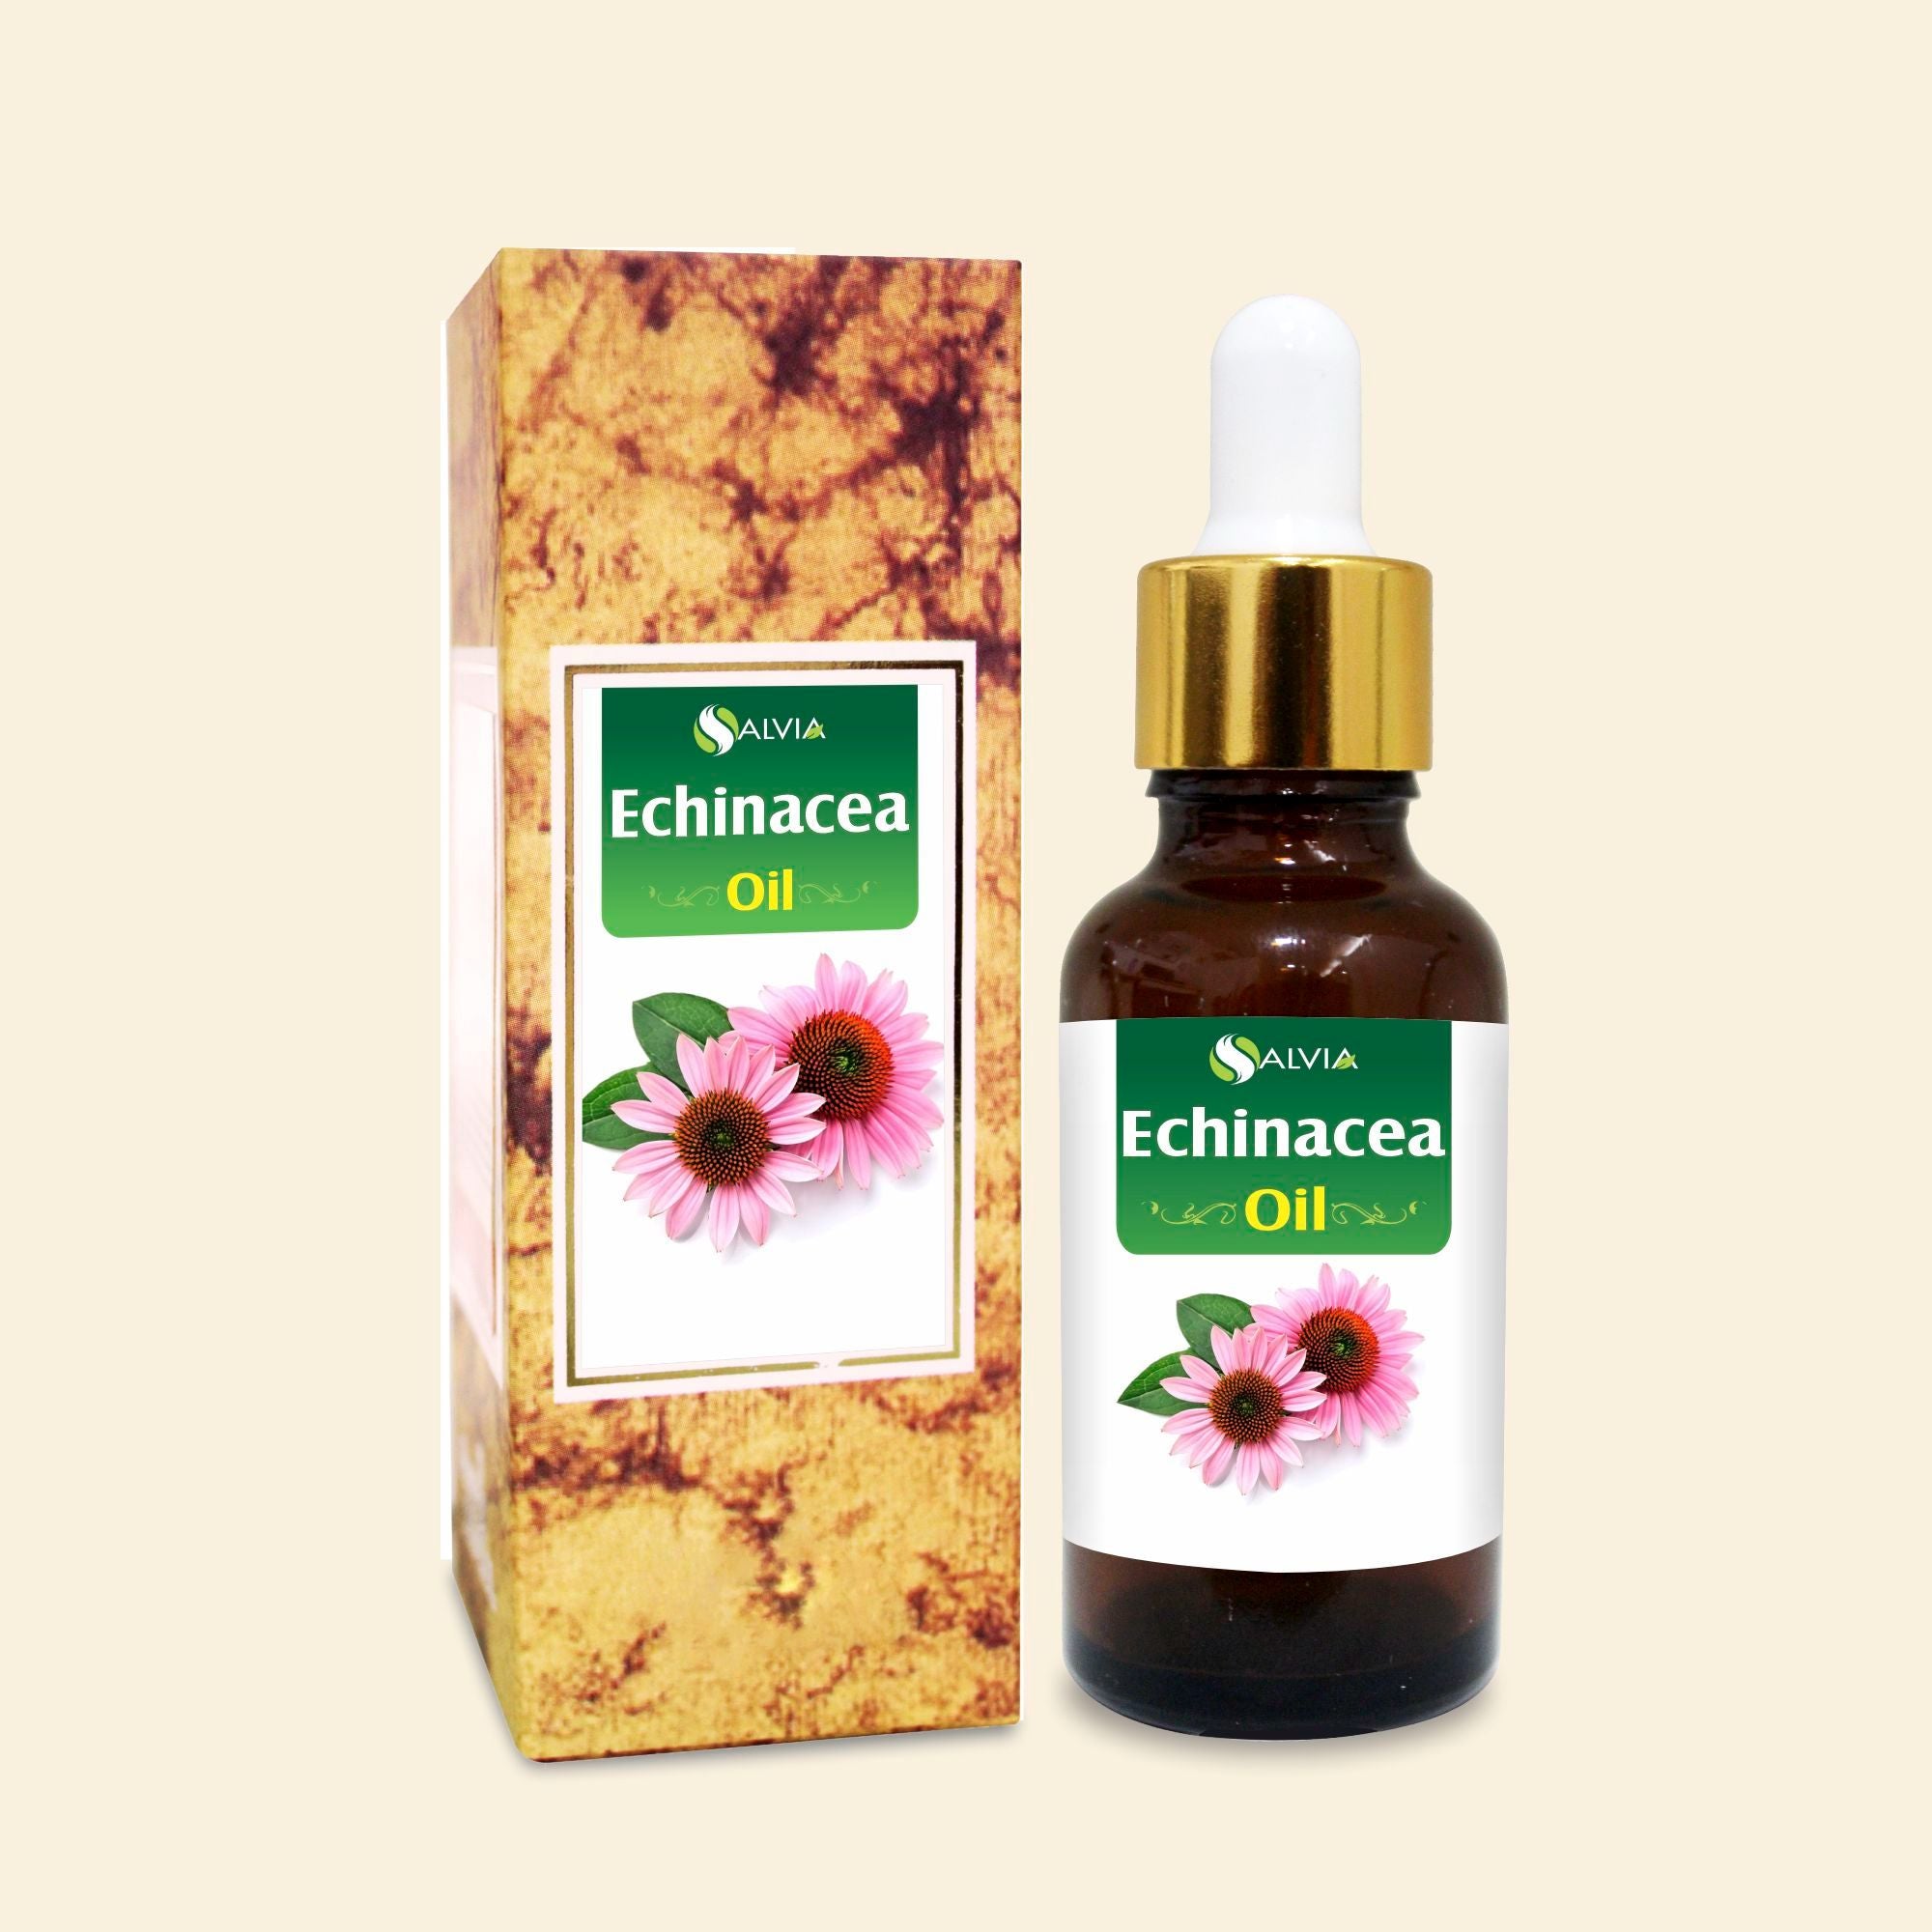 Salvia Natural Essential Oils Echinacea Oil for skin